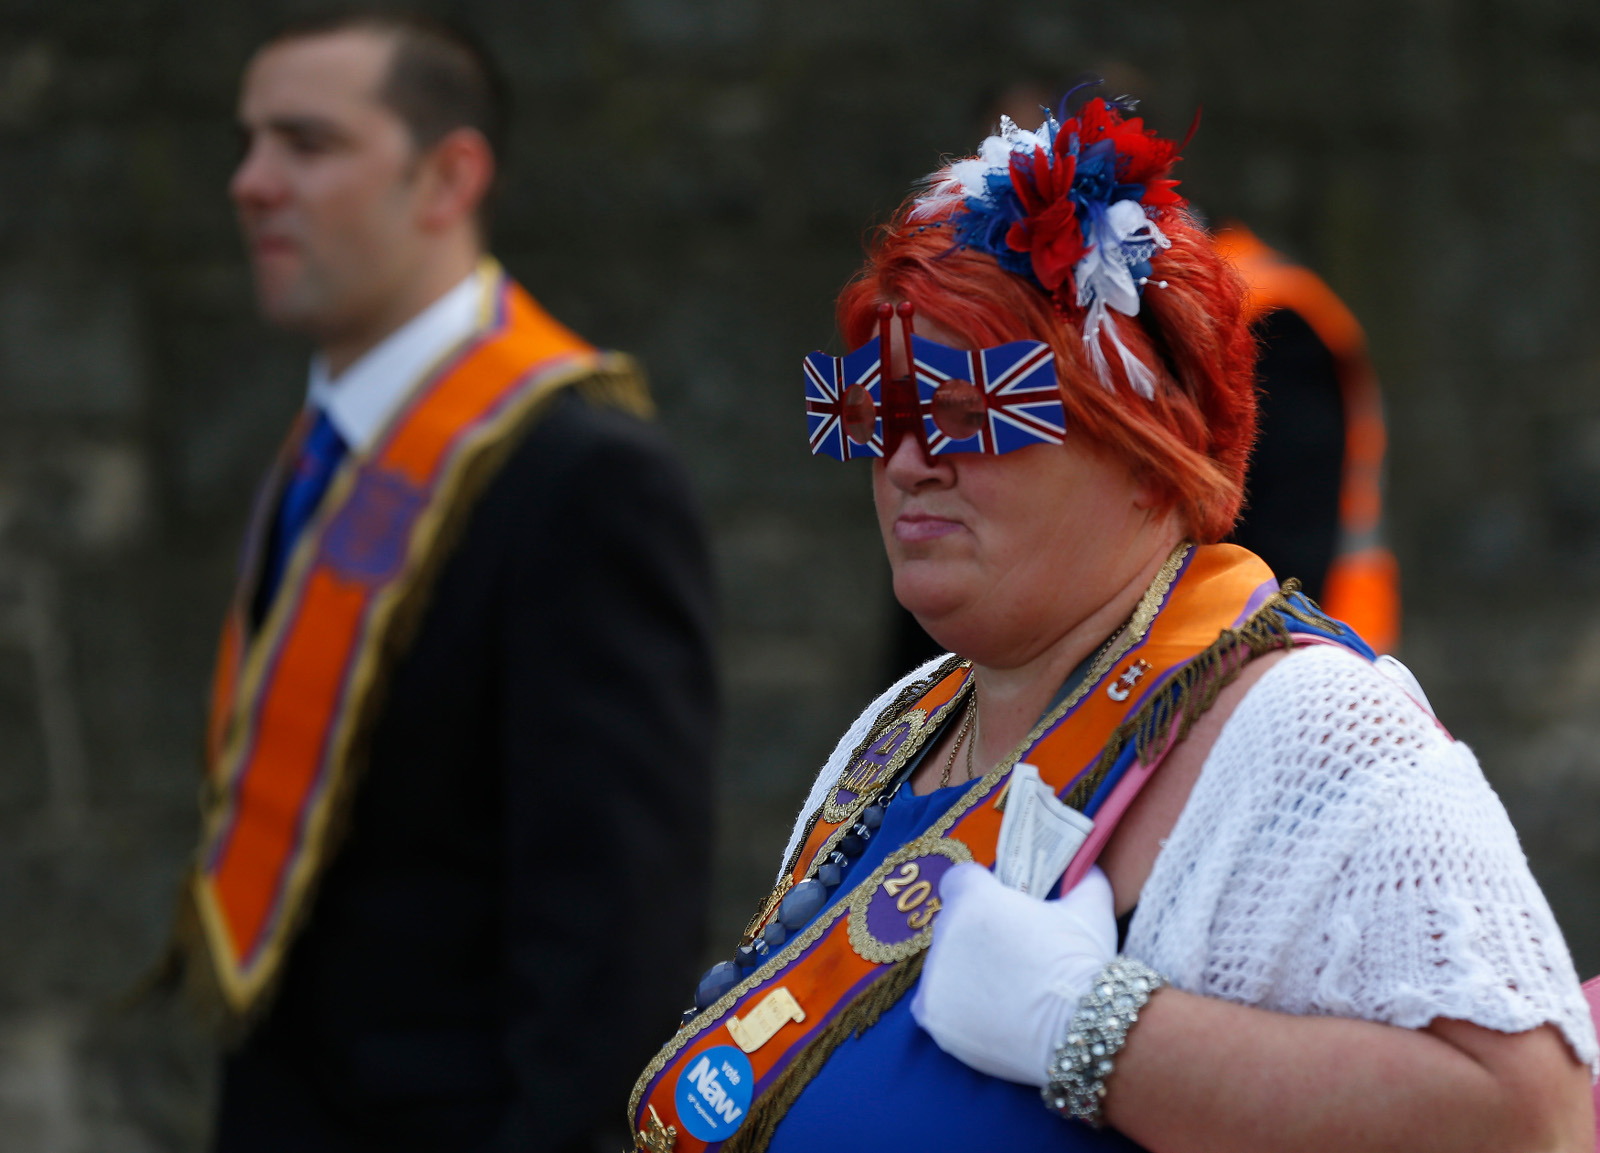 Orange Order Edinburgh Parade